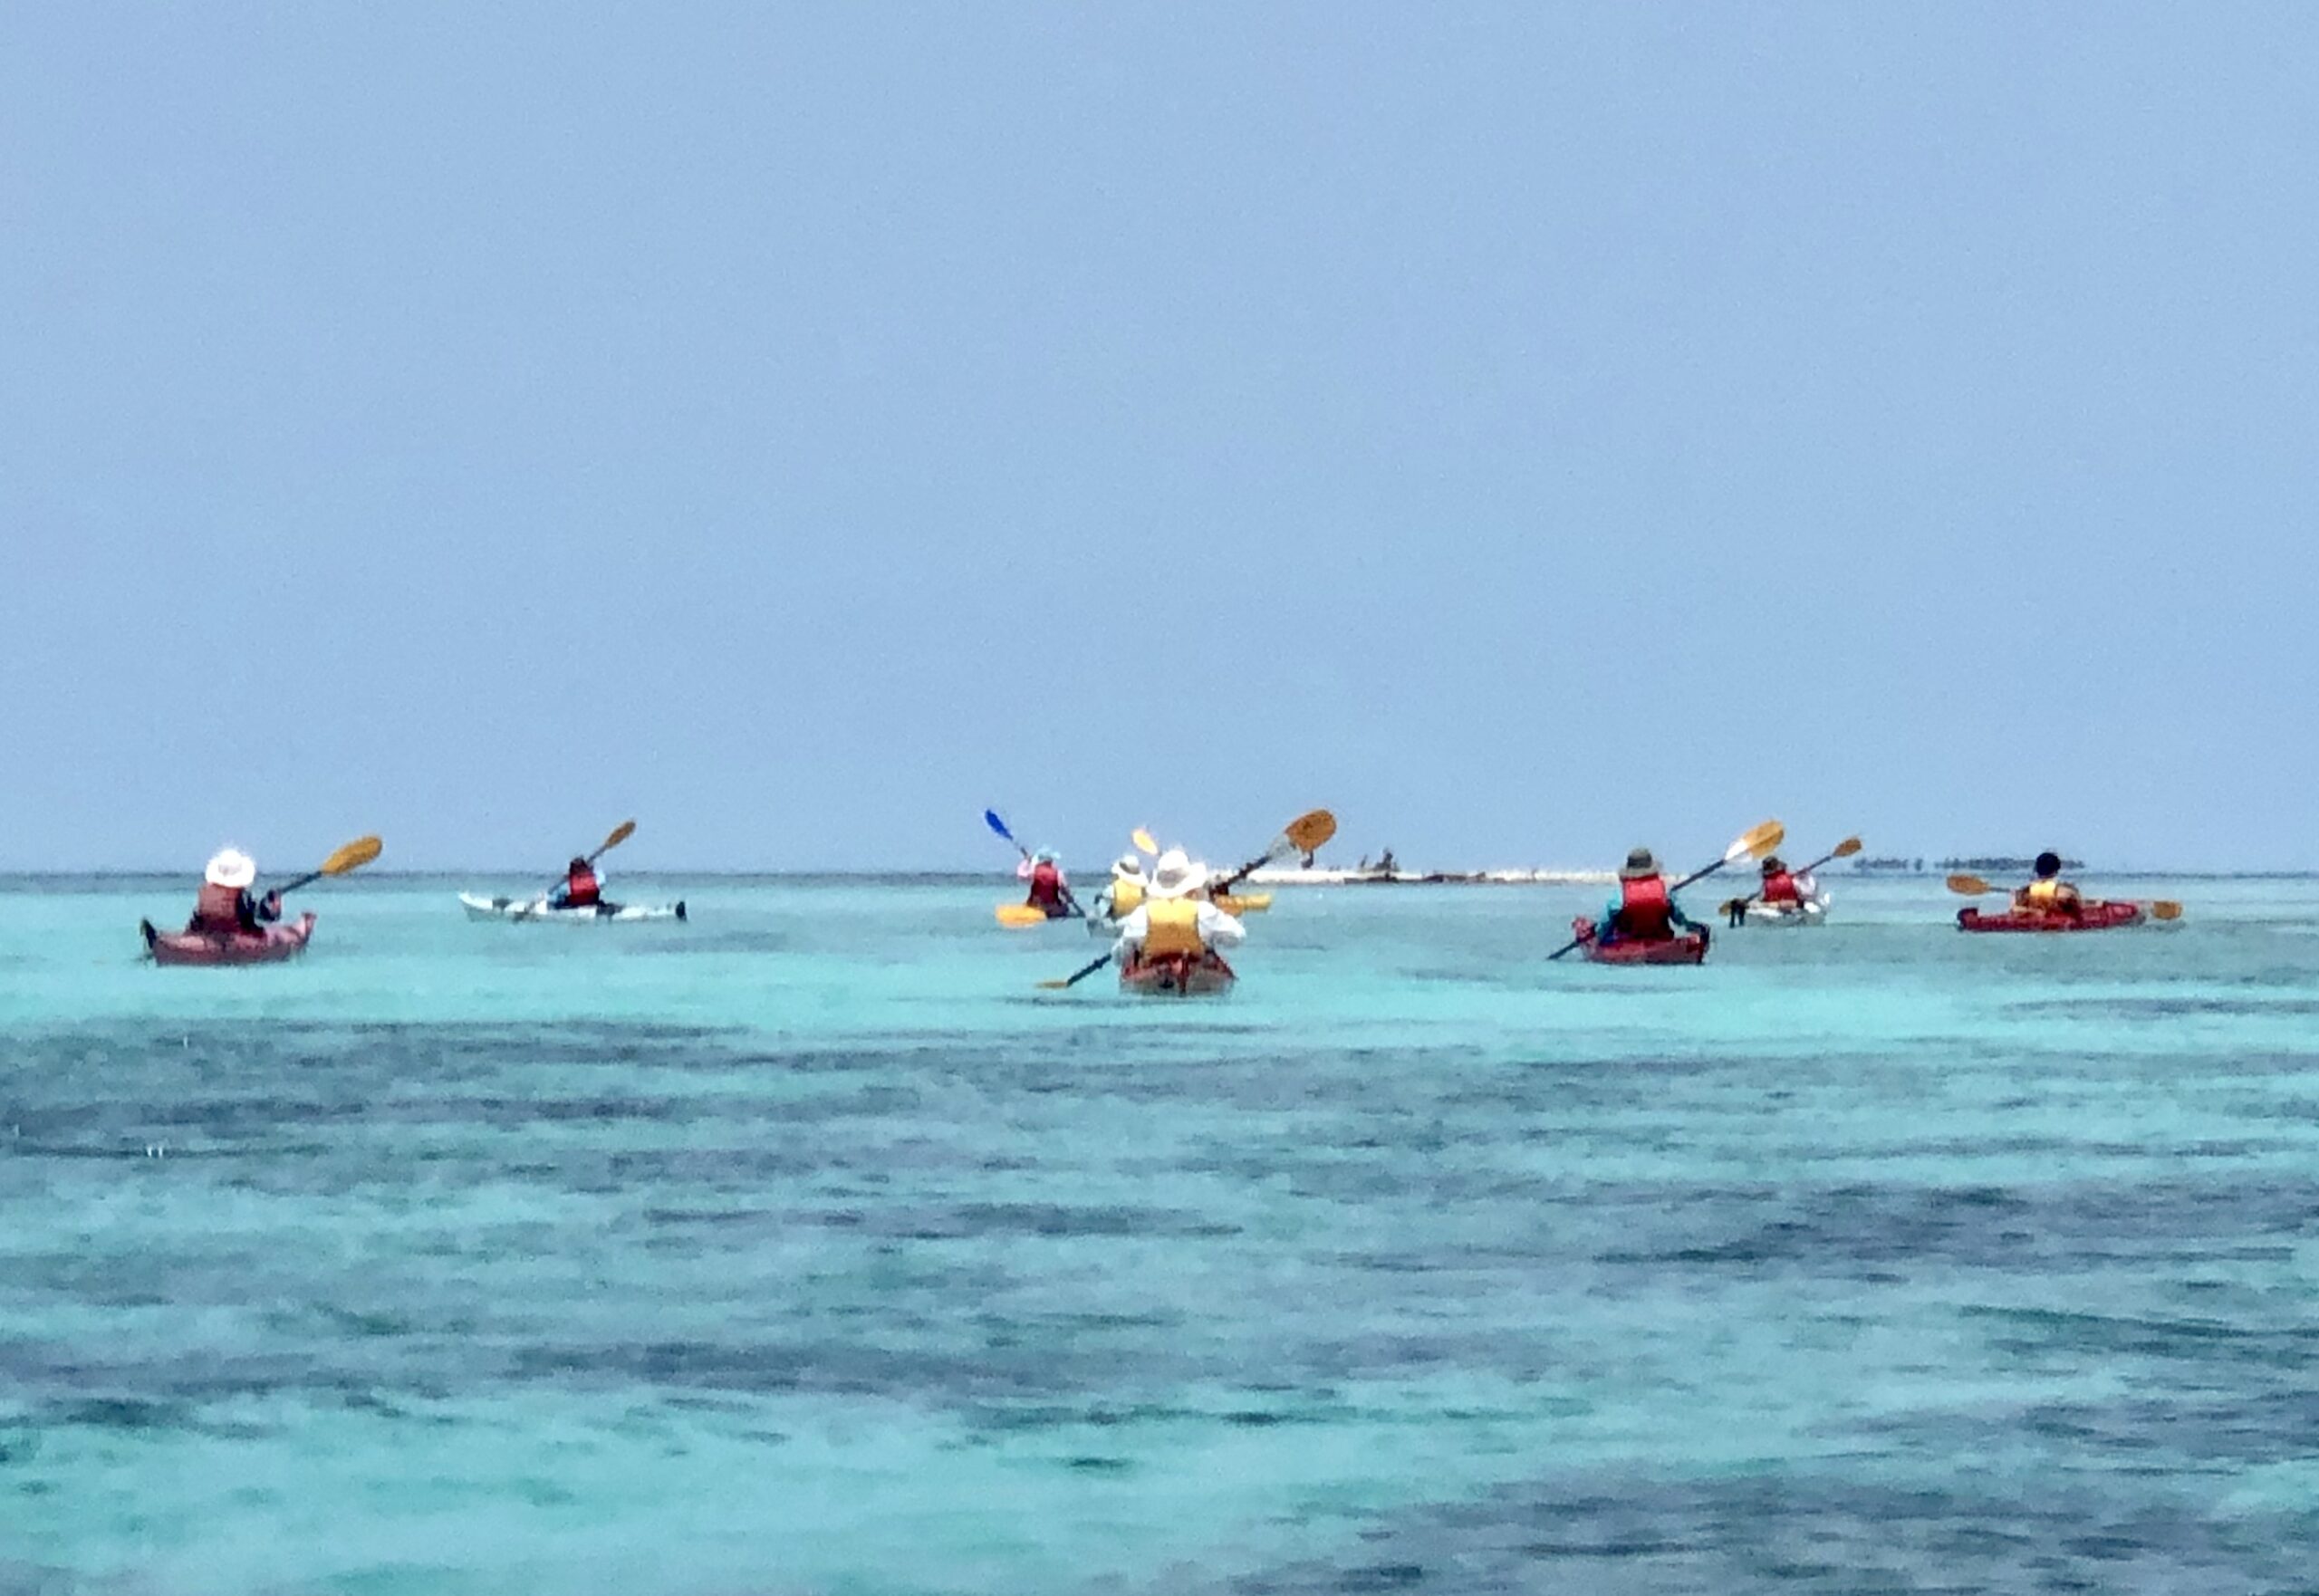 kayaks on the water